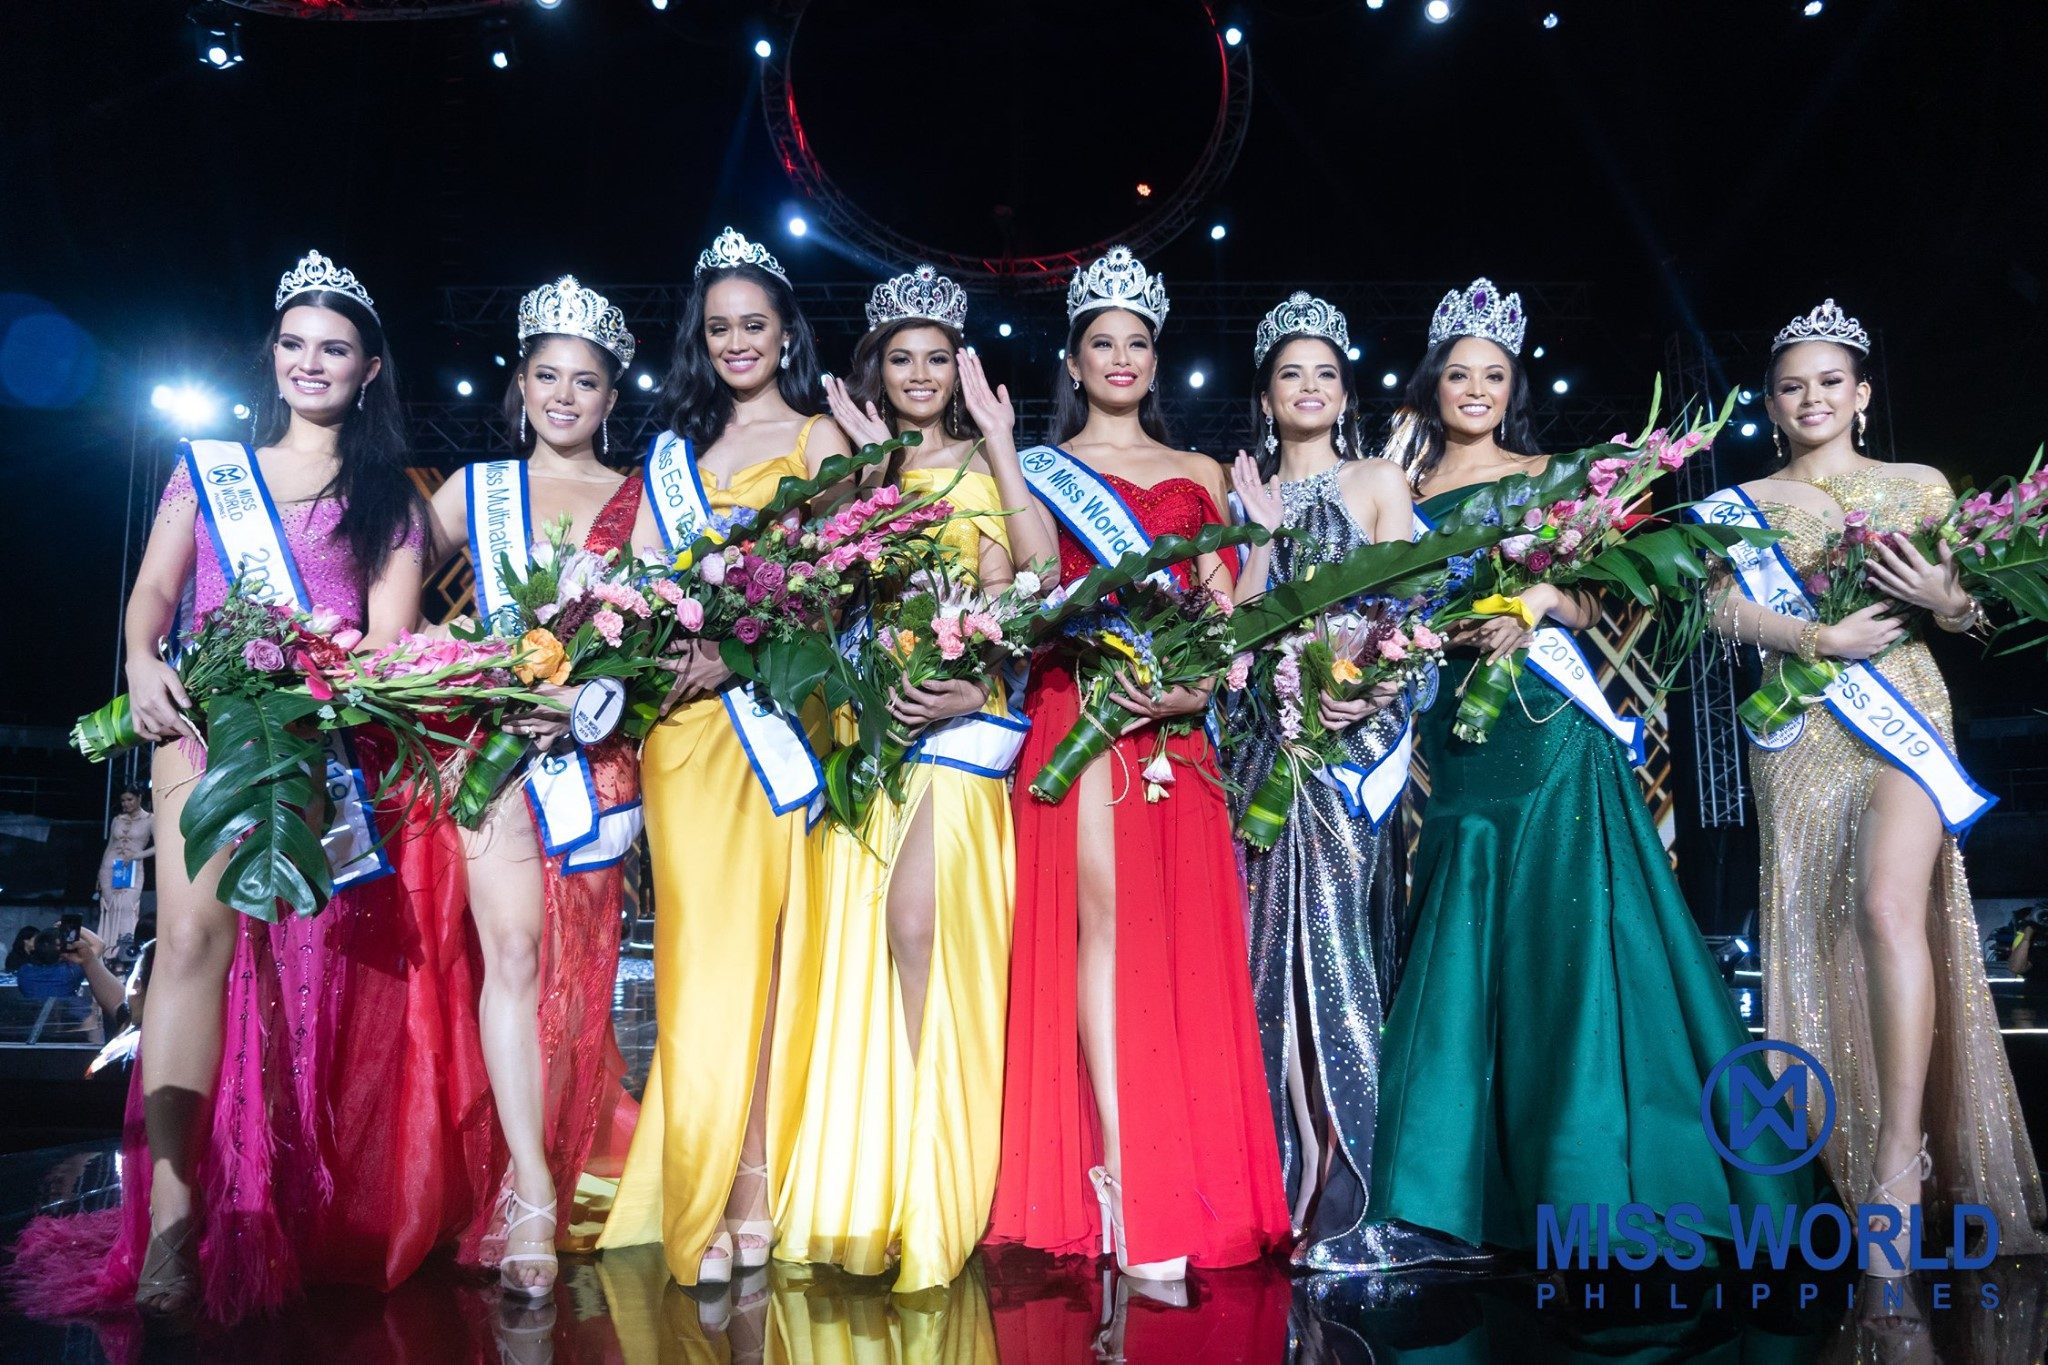 Miss World Philippines 2021 coronation night ‘postponed indefinitely’